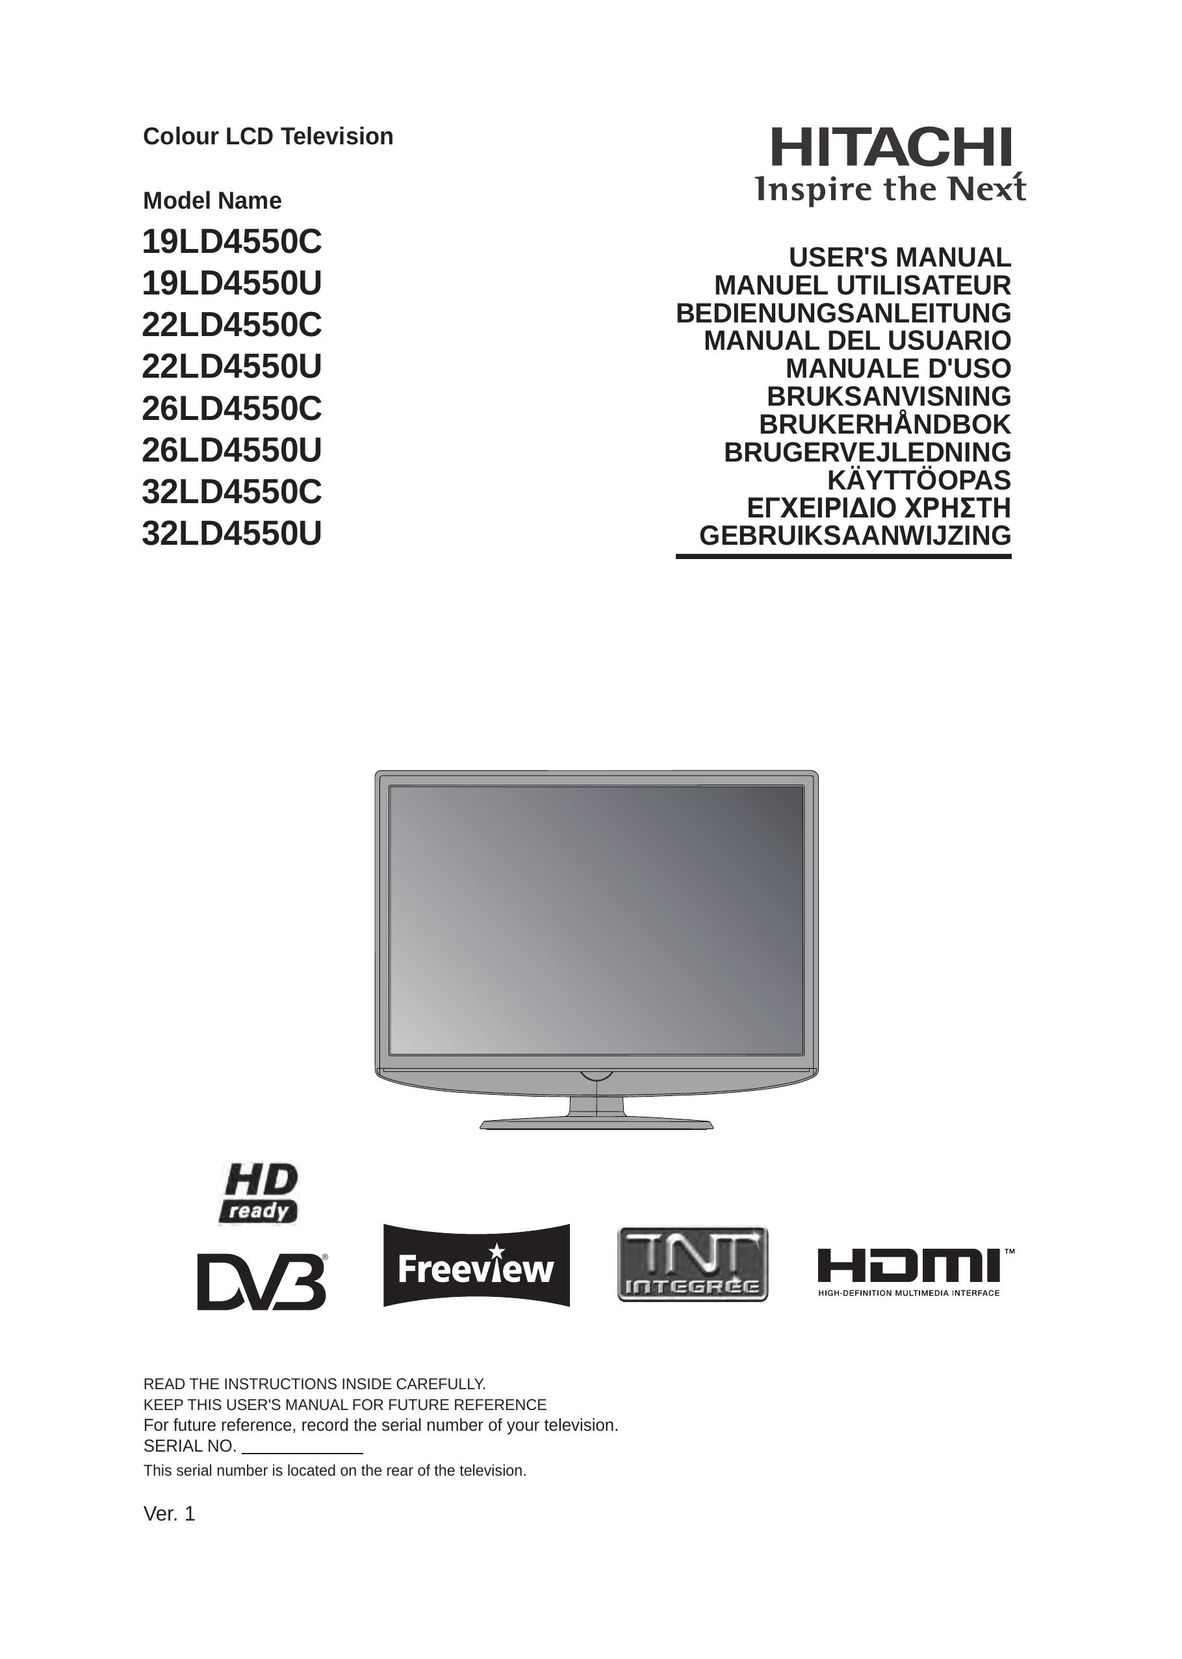 Hitachi 22LD4550U Flat Panel Television User Manual